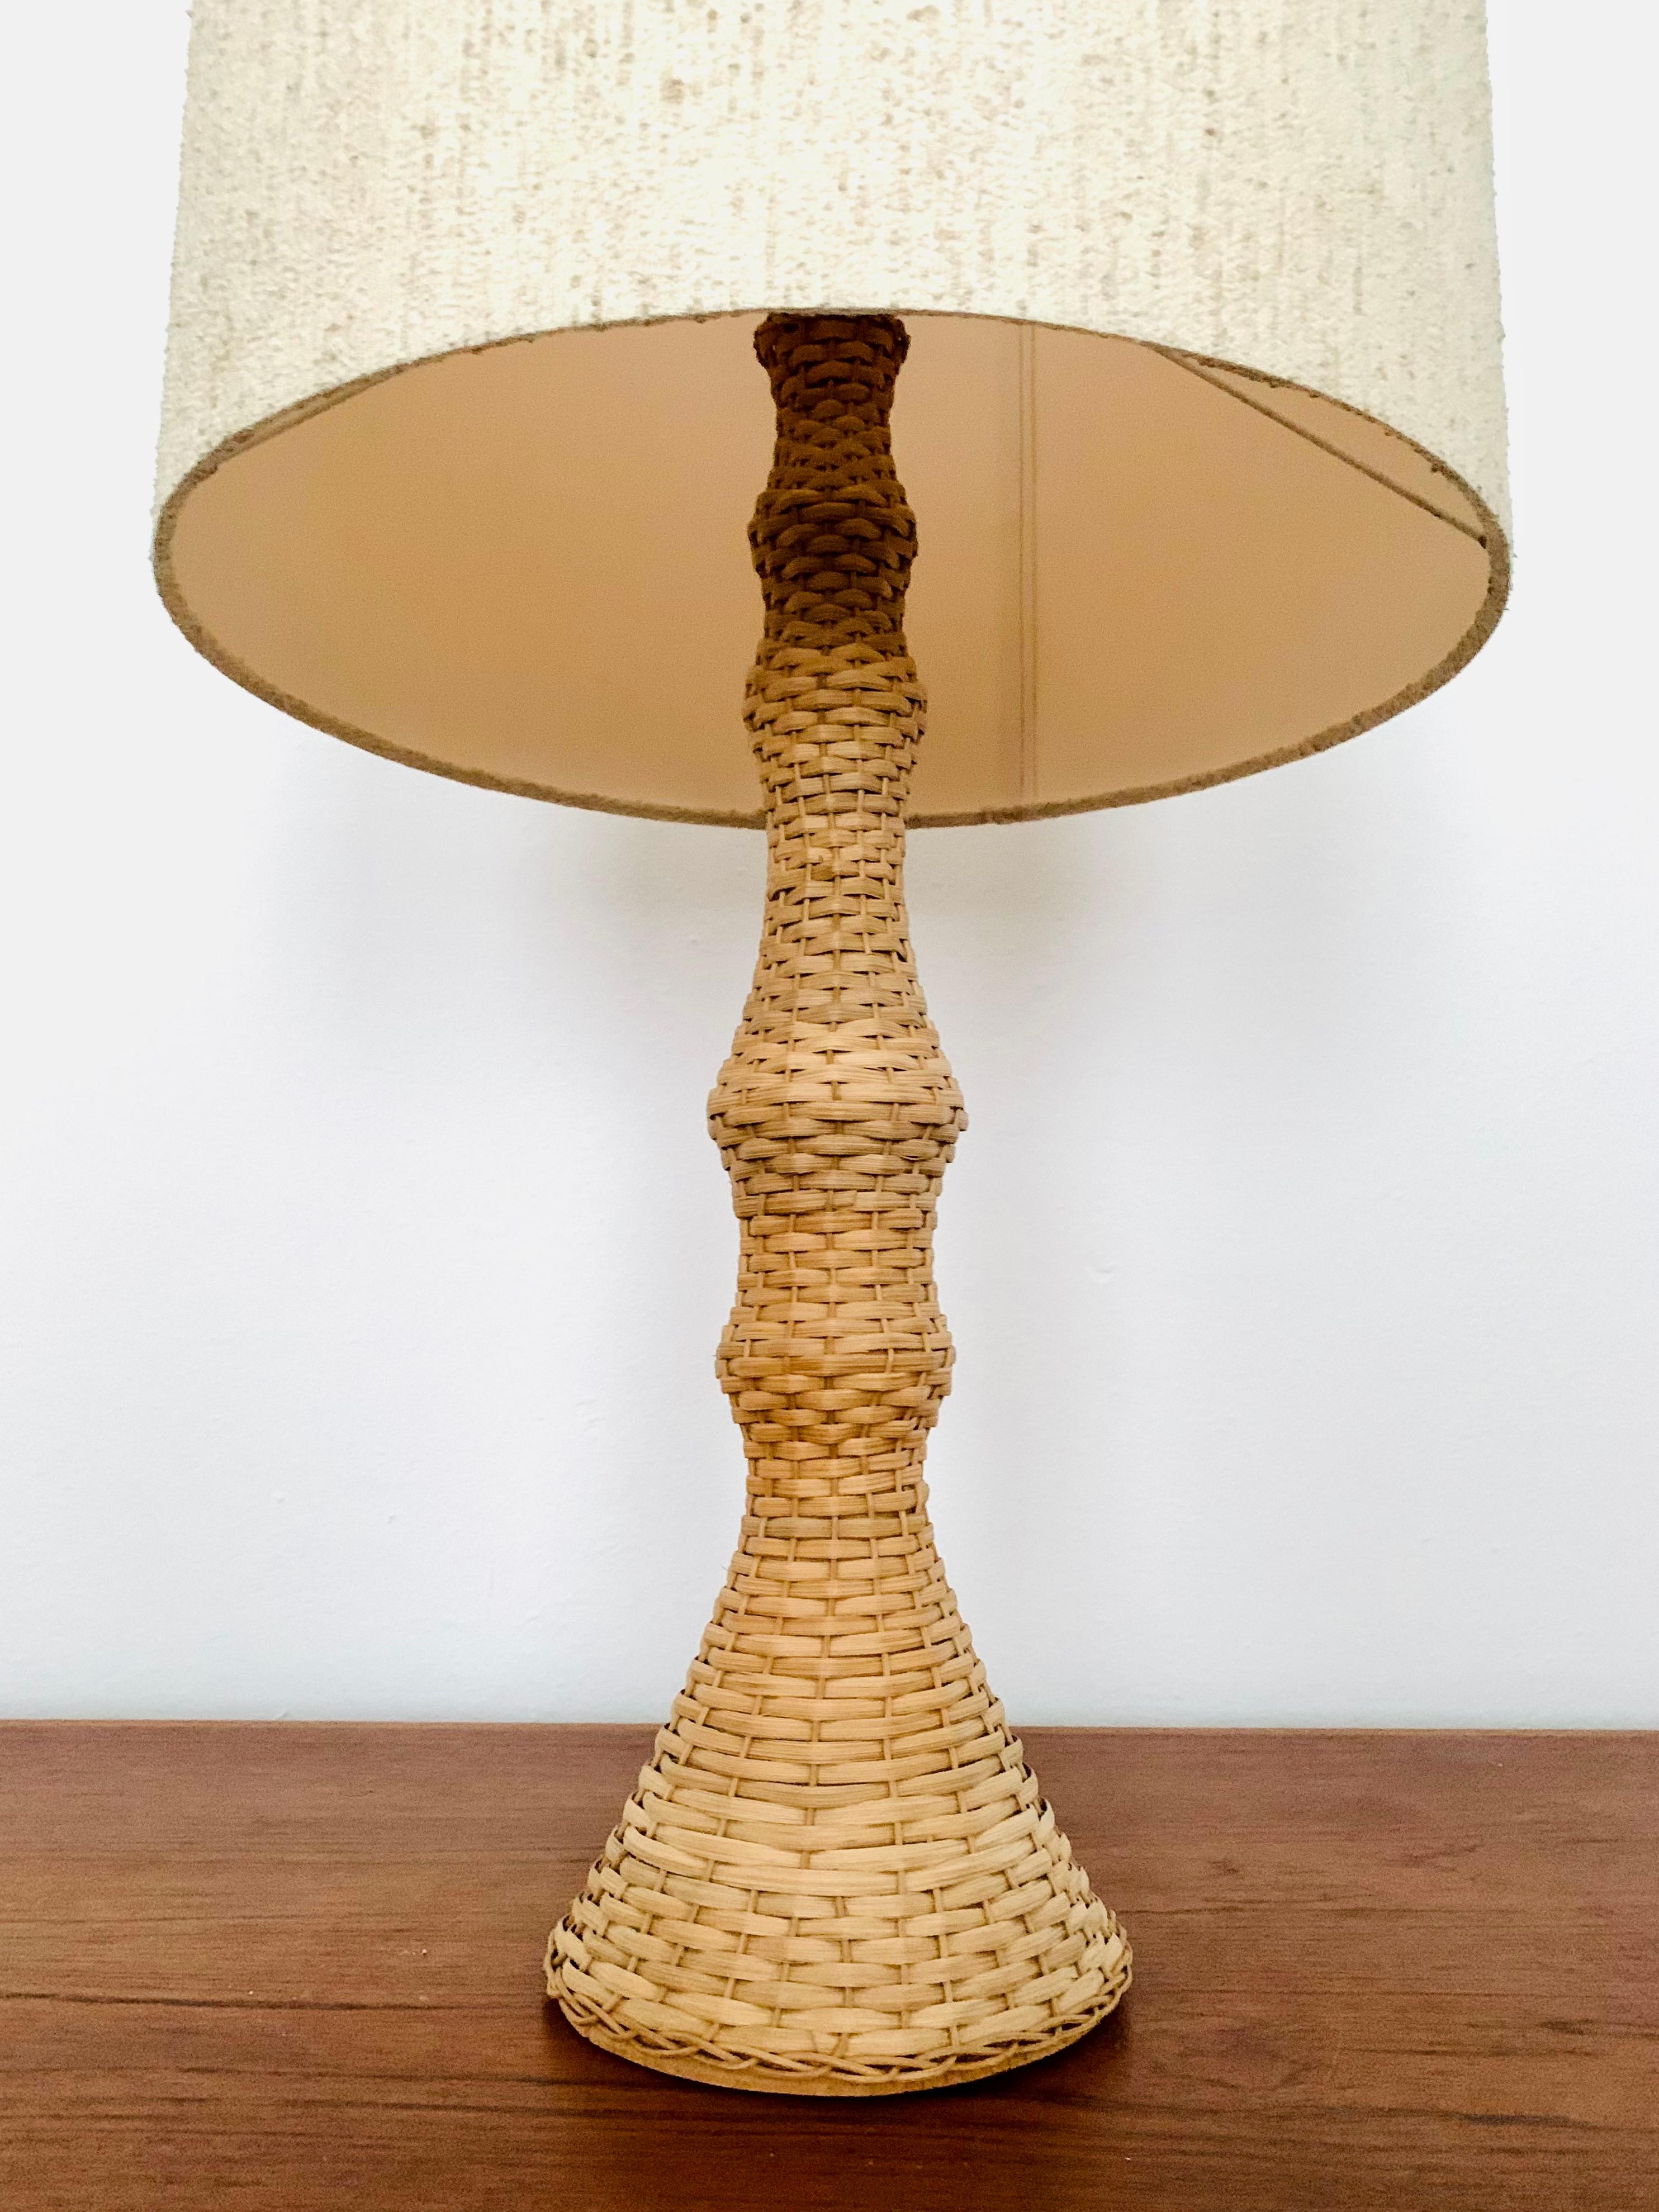 Wicker Table Lamp In Good Condition For Sale In München, DE